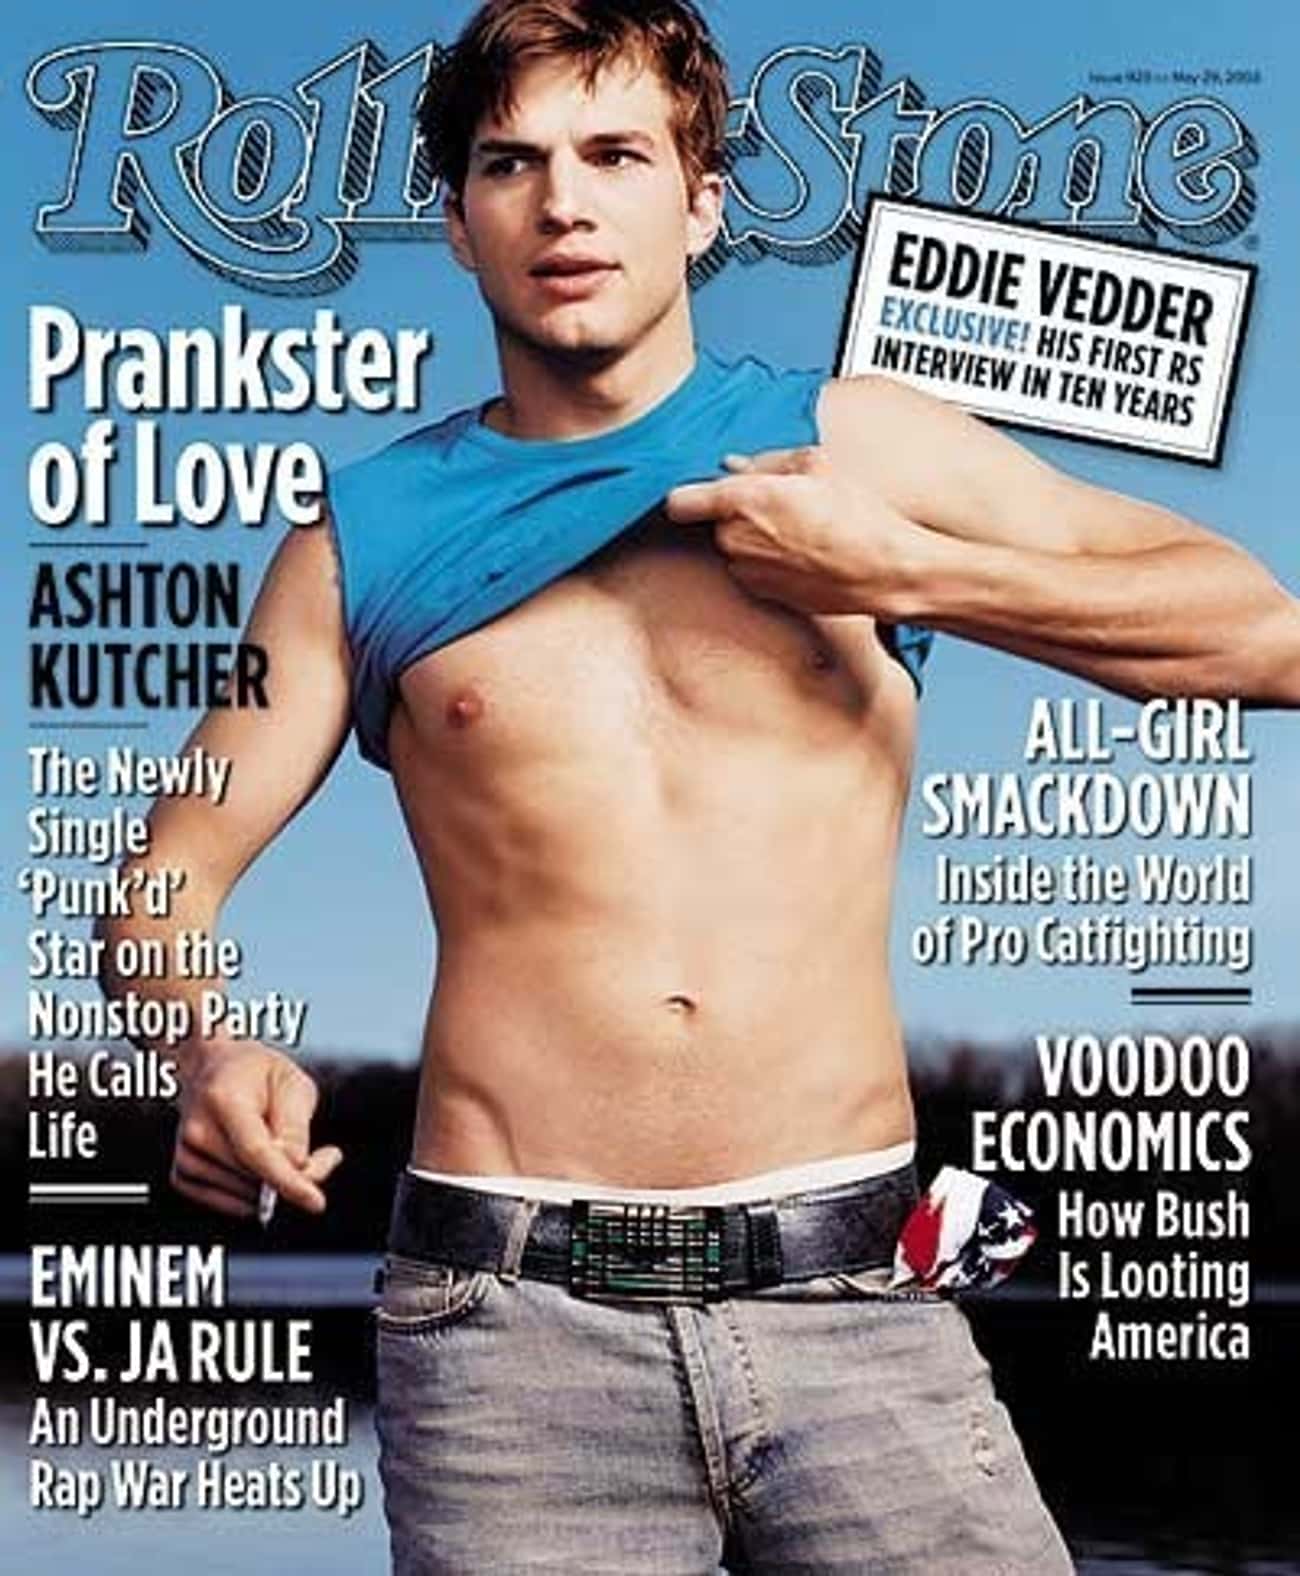 Ashton Kutcher in Cropped Sleeveless Shirt